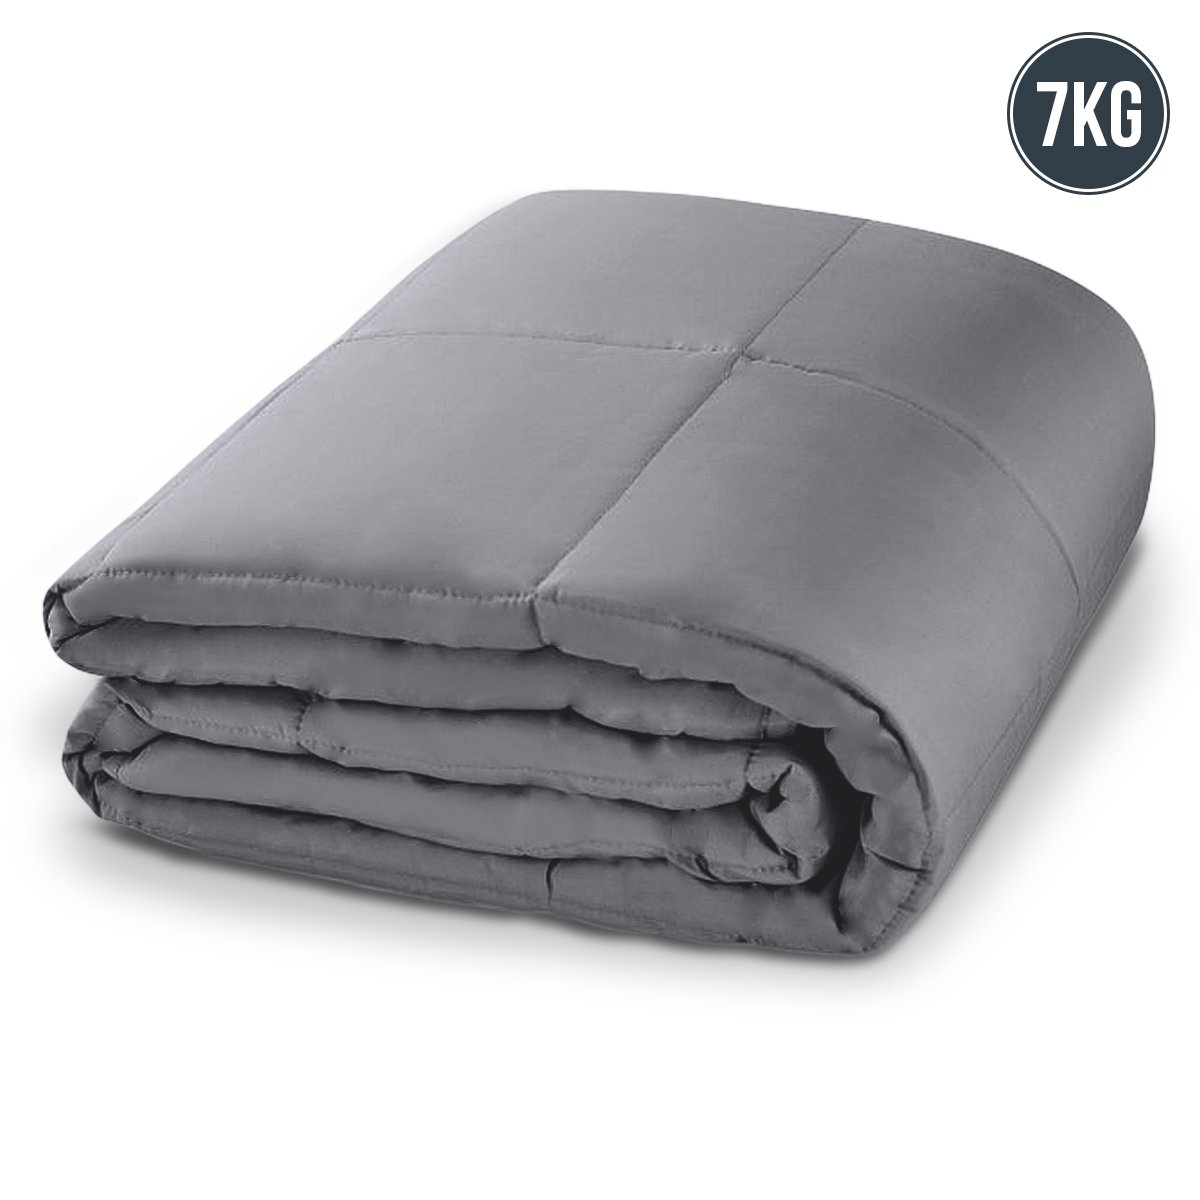 Laura Hill Weighted Blanket Heavy Quilt Doona 7Kg - Grey 2